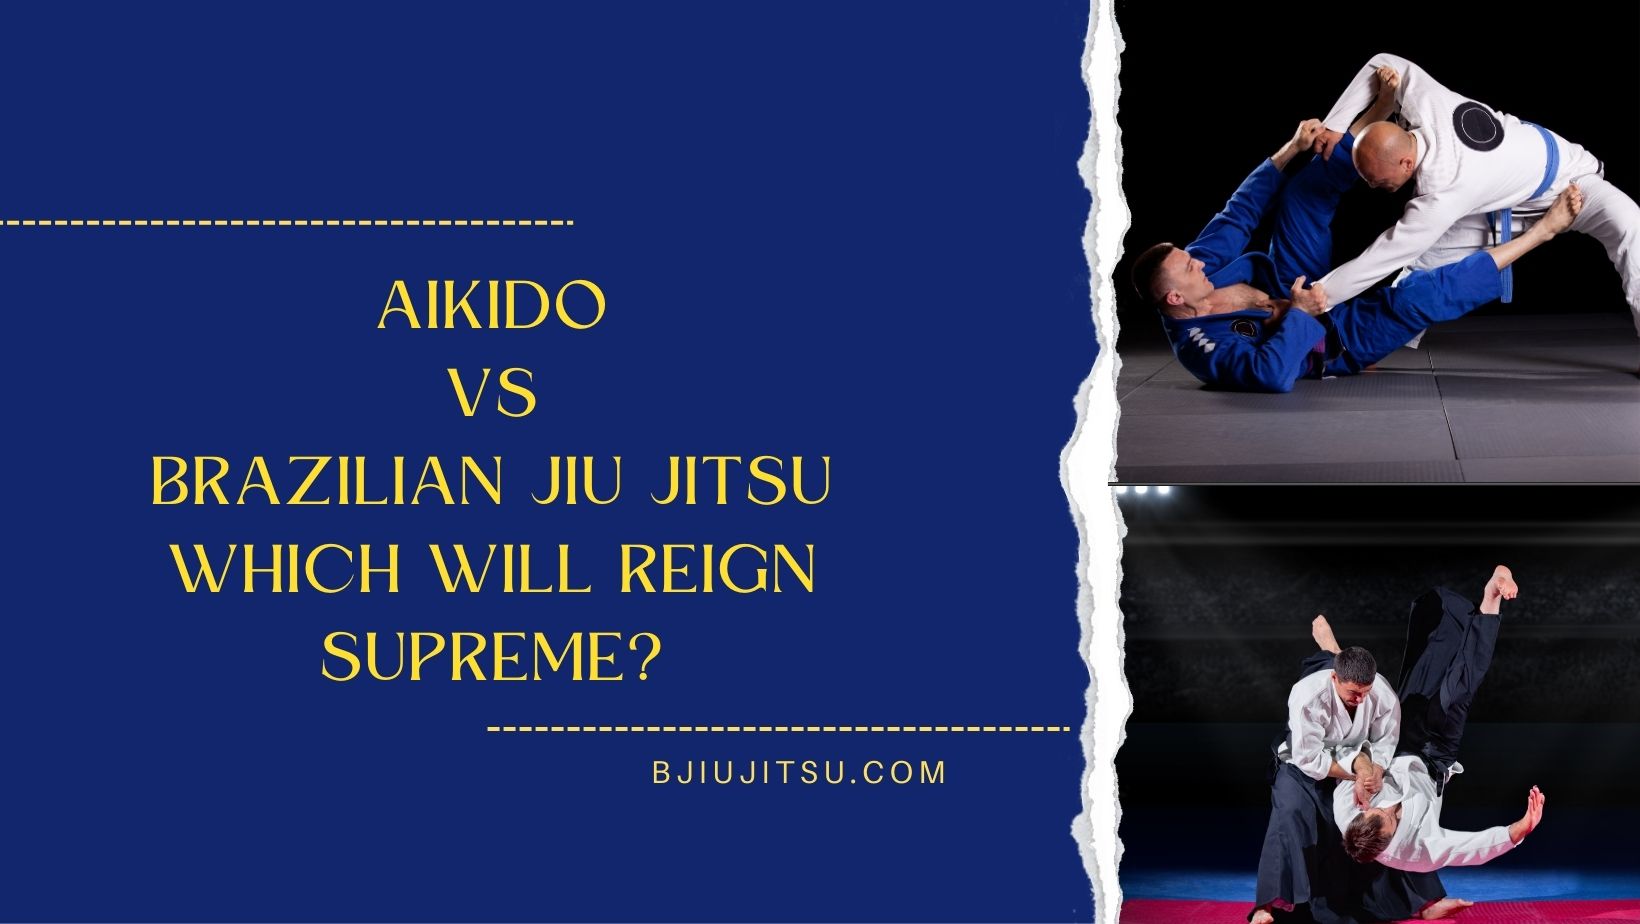 Aikido vs brazilian jiu jitsu